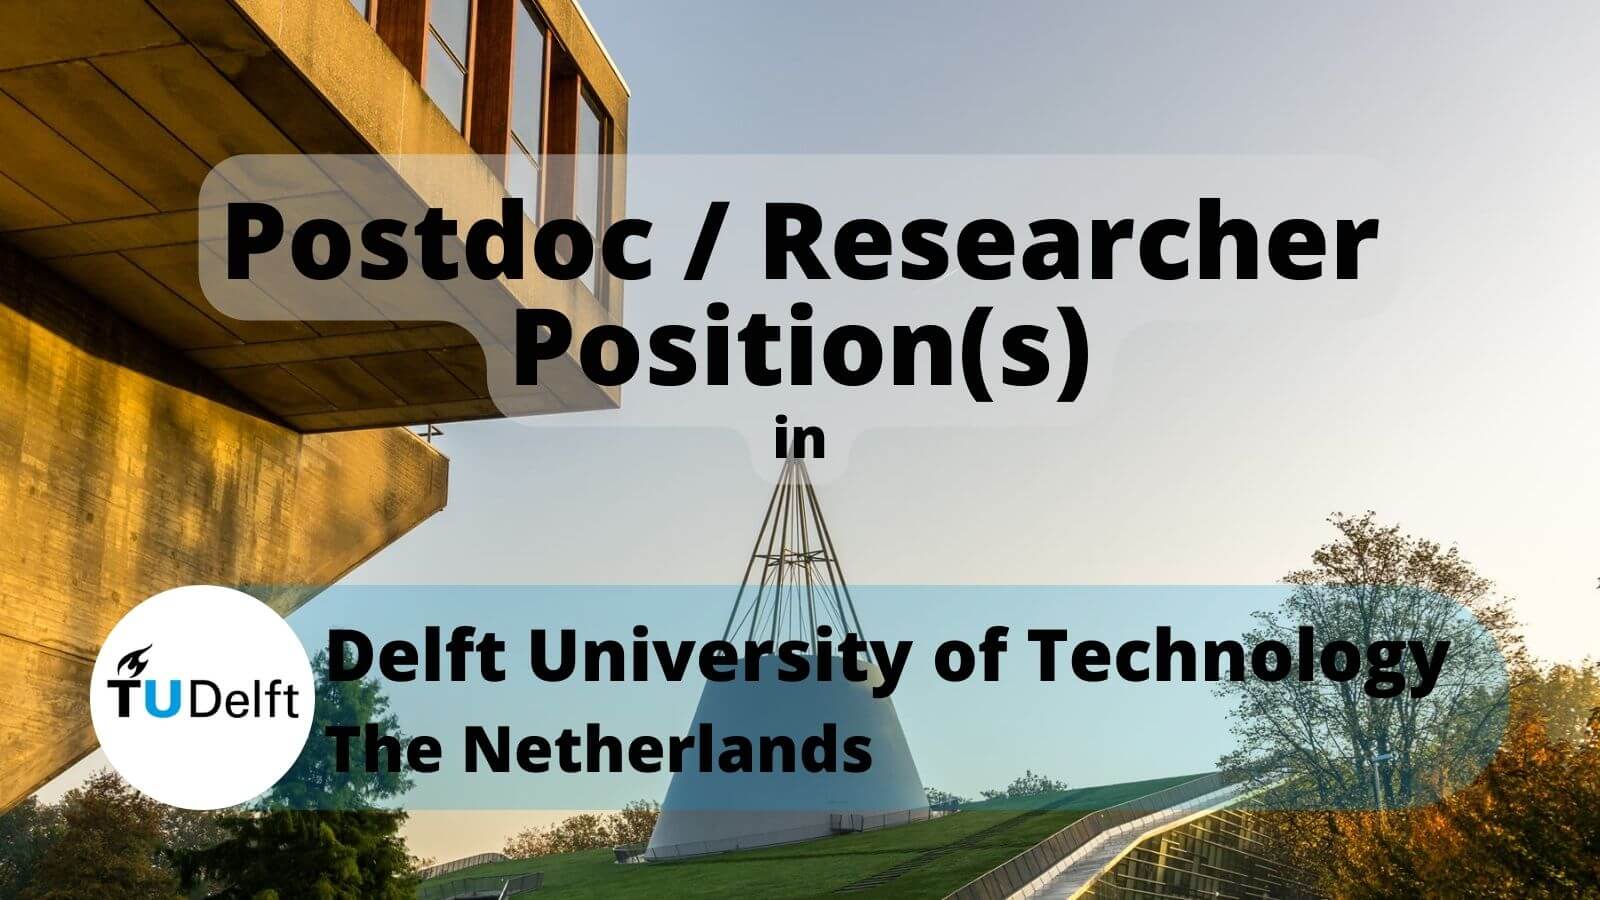 Postdoc position at Delft University of Technology TUDelft, The Netherlands